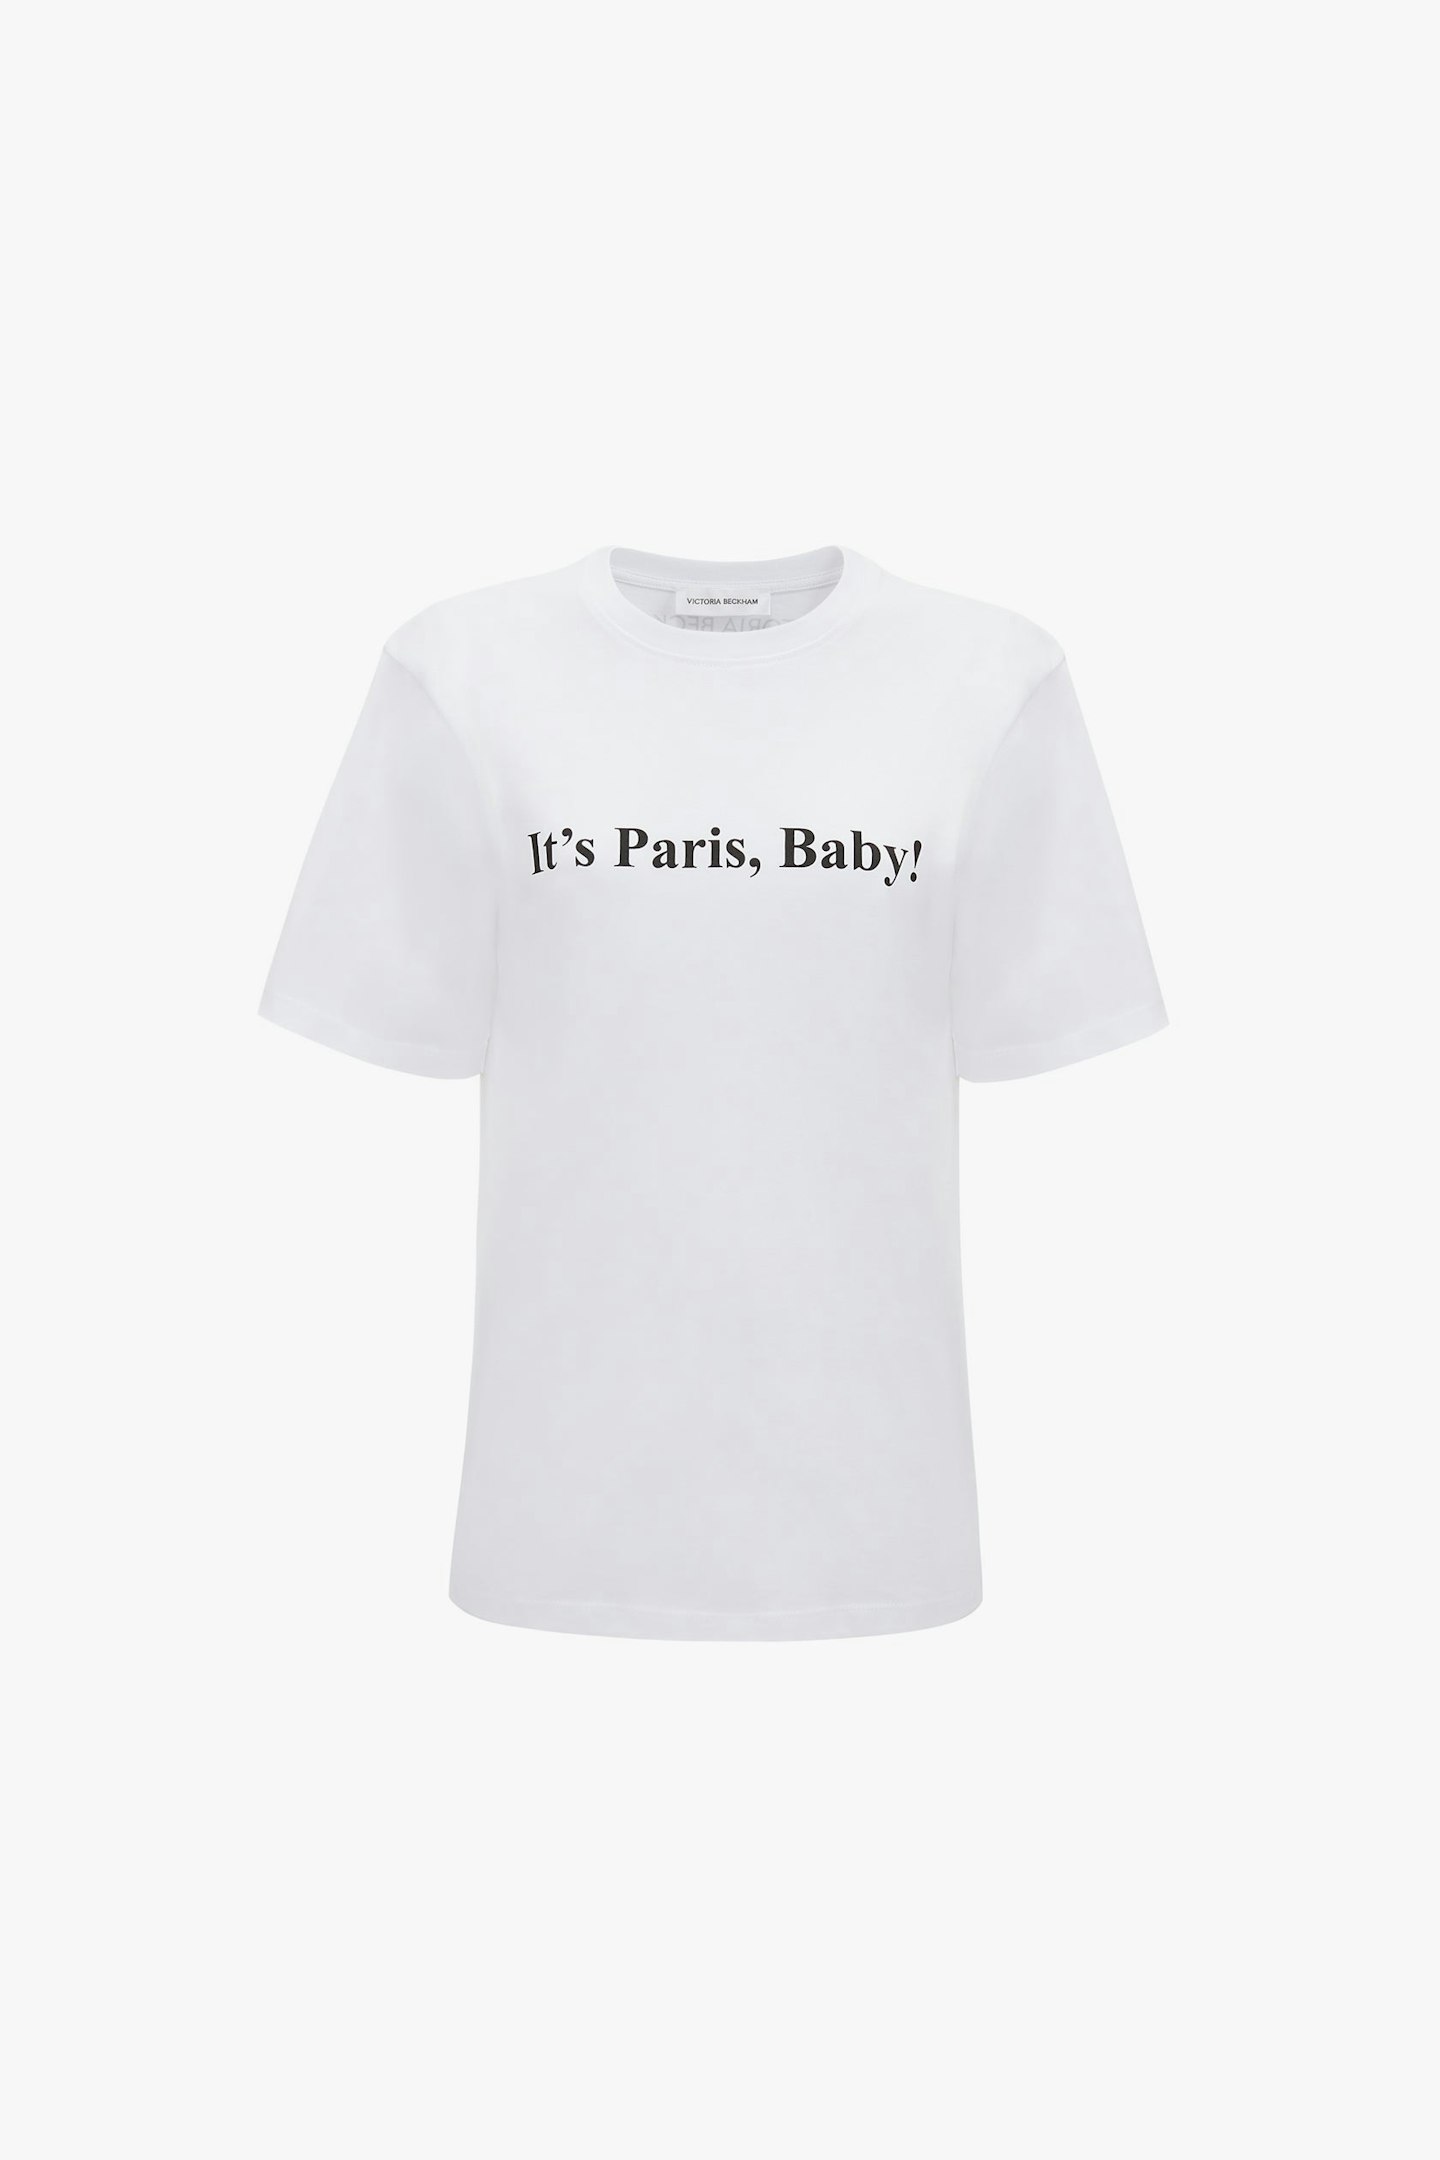 Victoria Beckham, It's Paris, Baby! T-Shirt